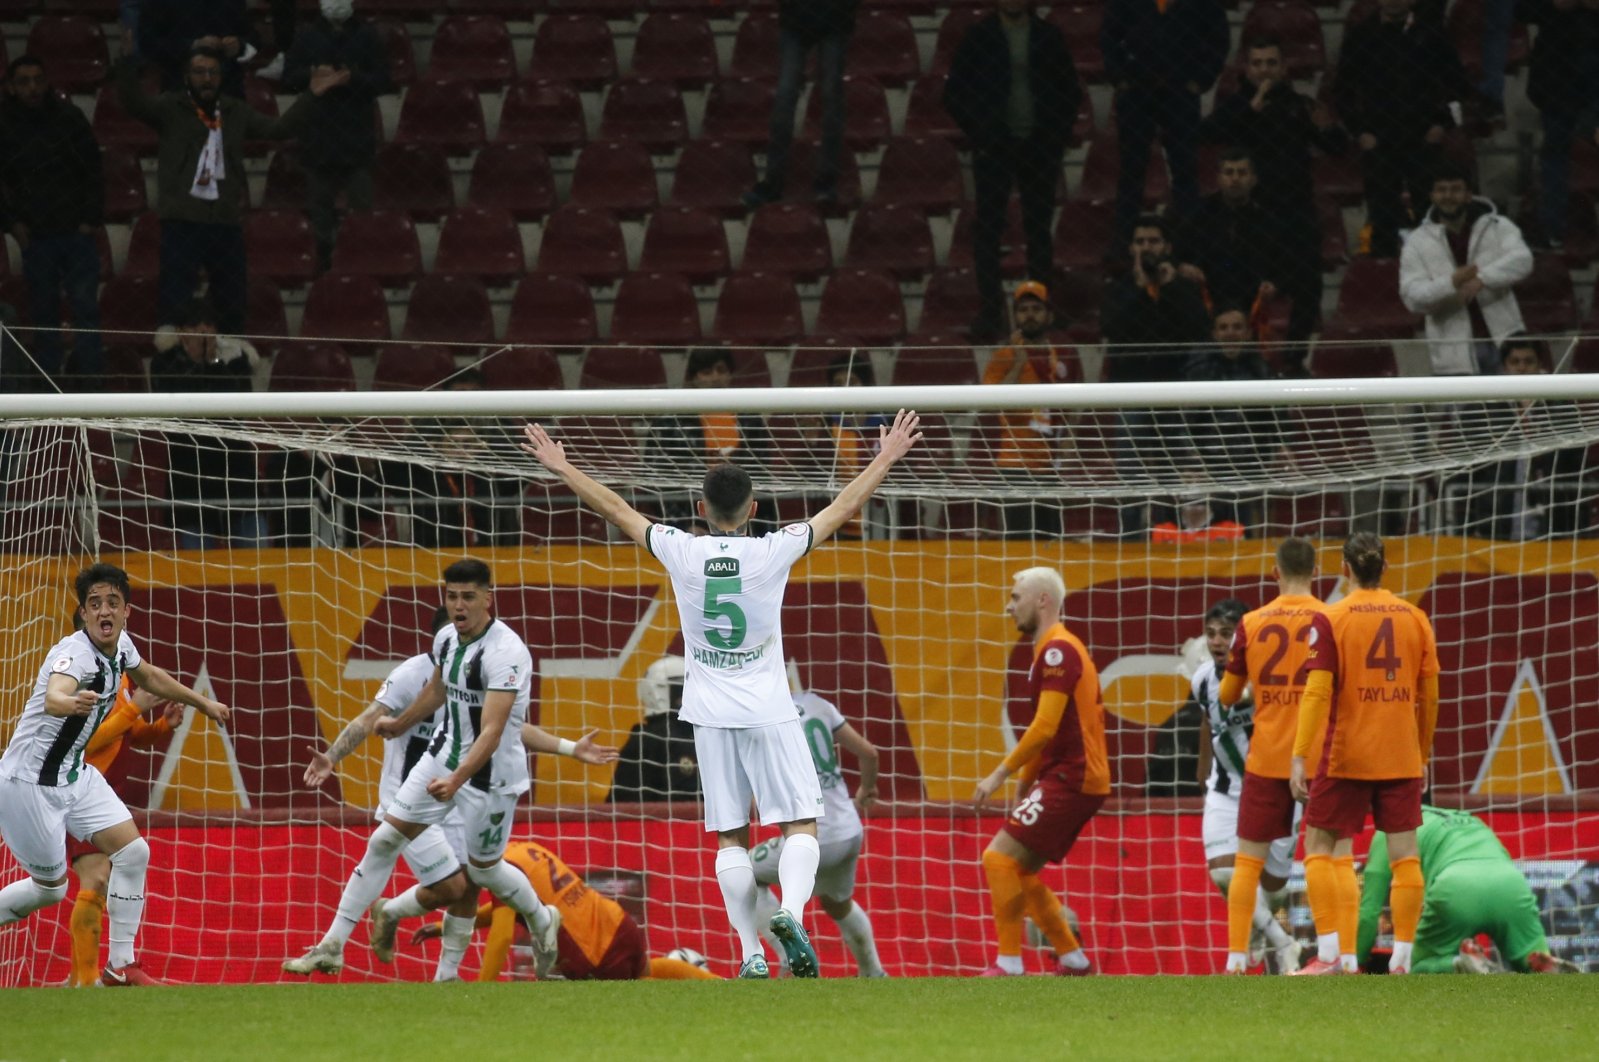 Galatasaray tersingkir dari Piala Turki setelah gol bunuh diri di detik terakhir